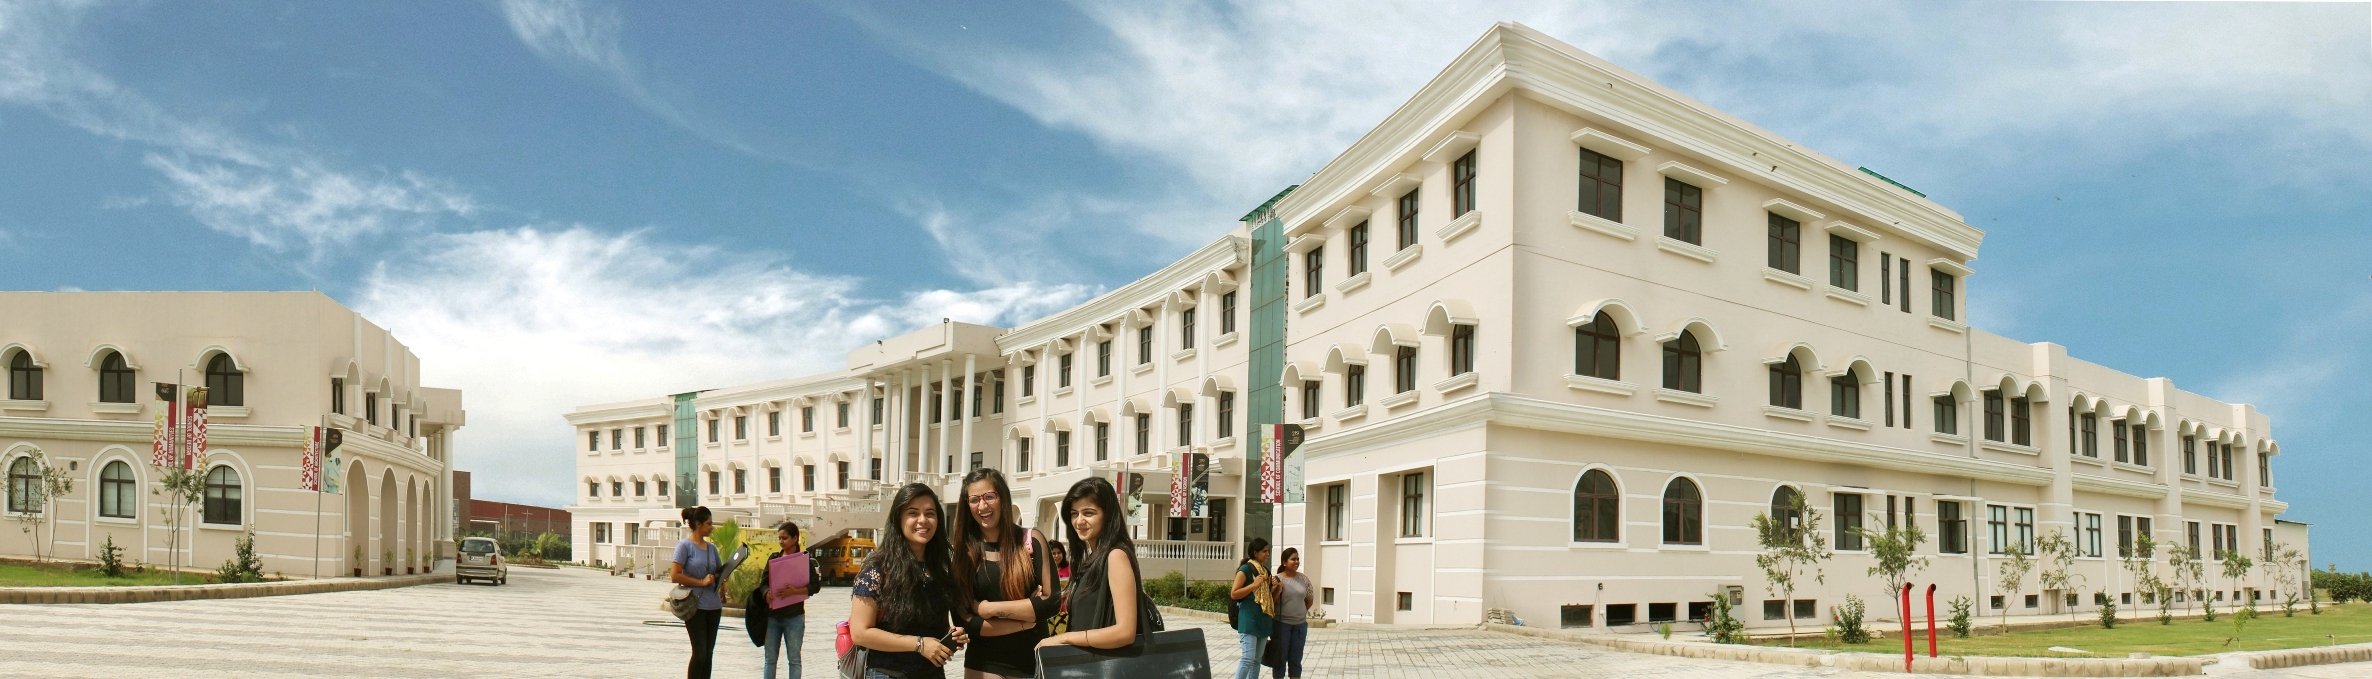 World University of Design  university